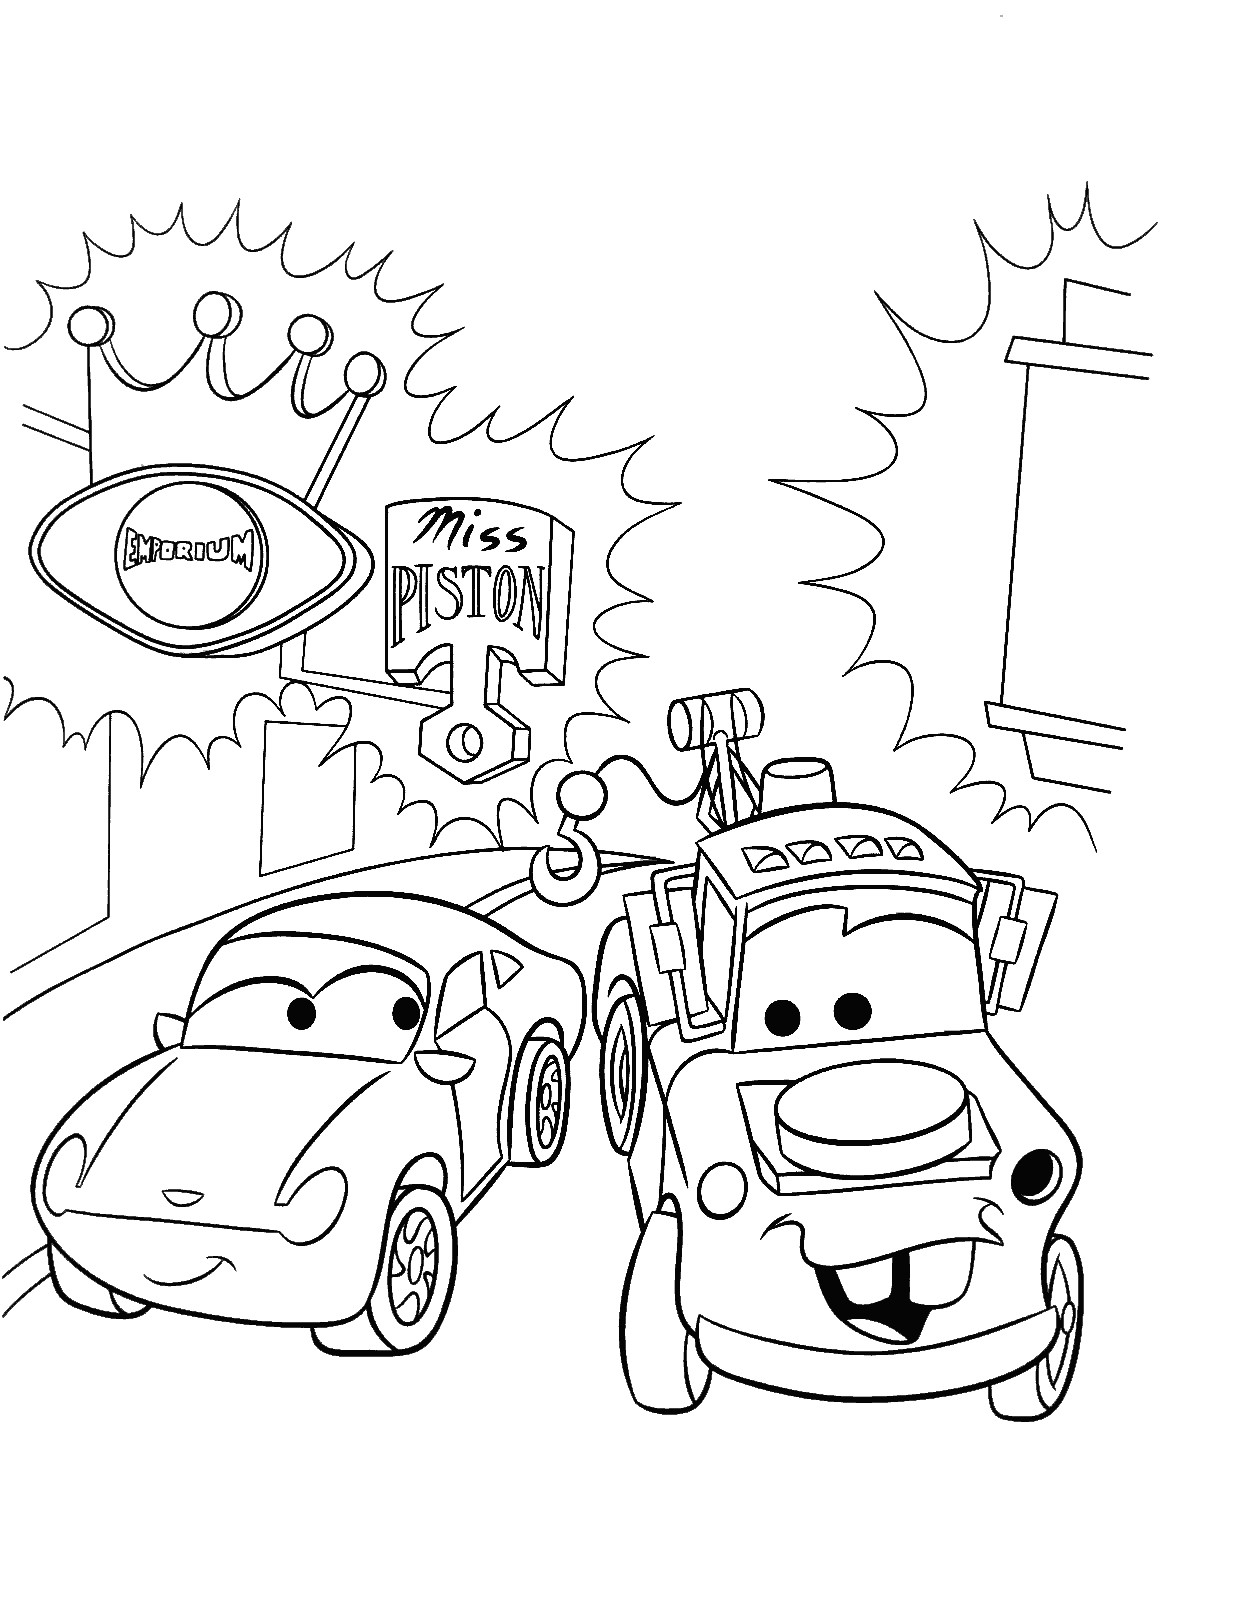 pixar-cars-coloring-pages-at-getcolorings-free-printable